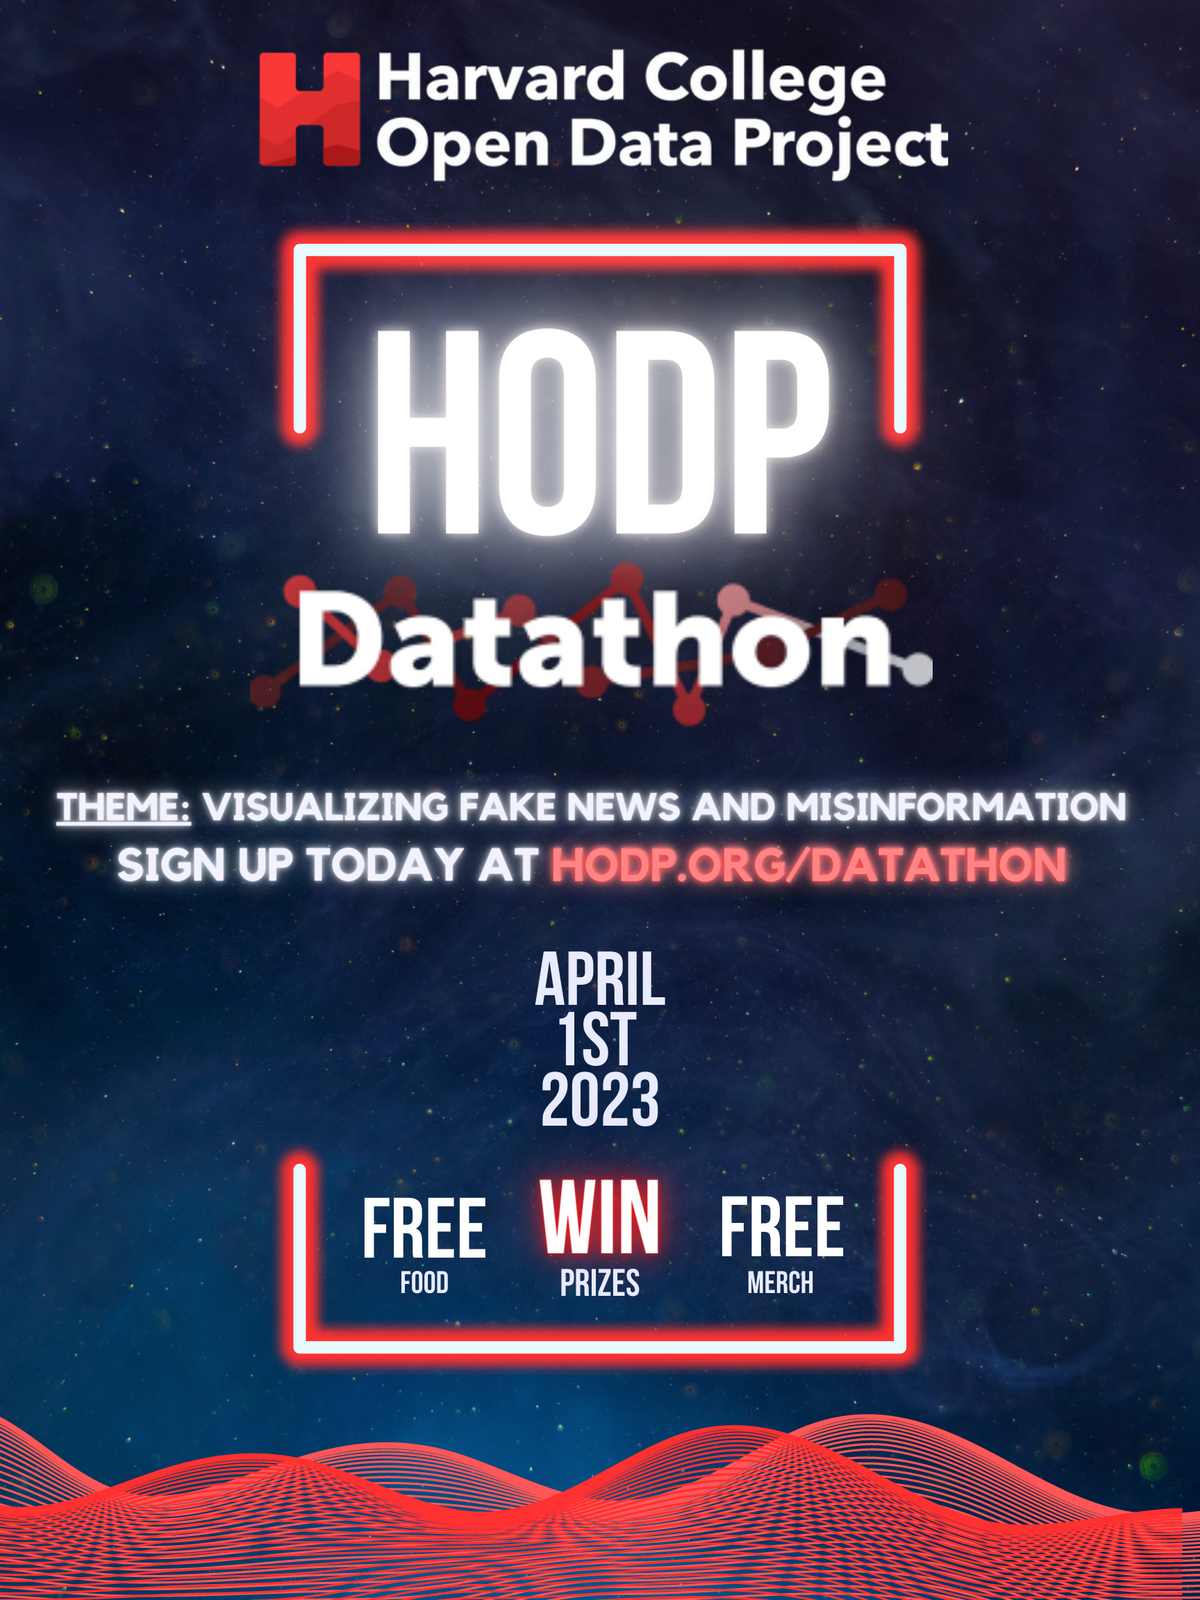 HODP Datathon Infographic, April 1st 2023